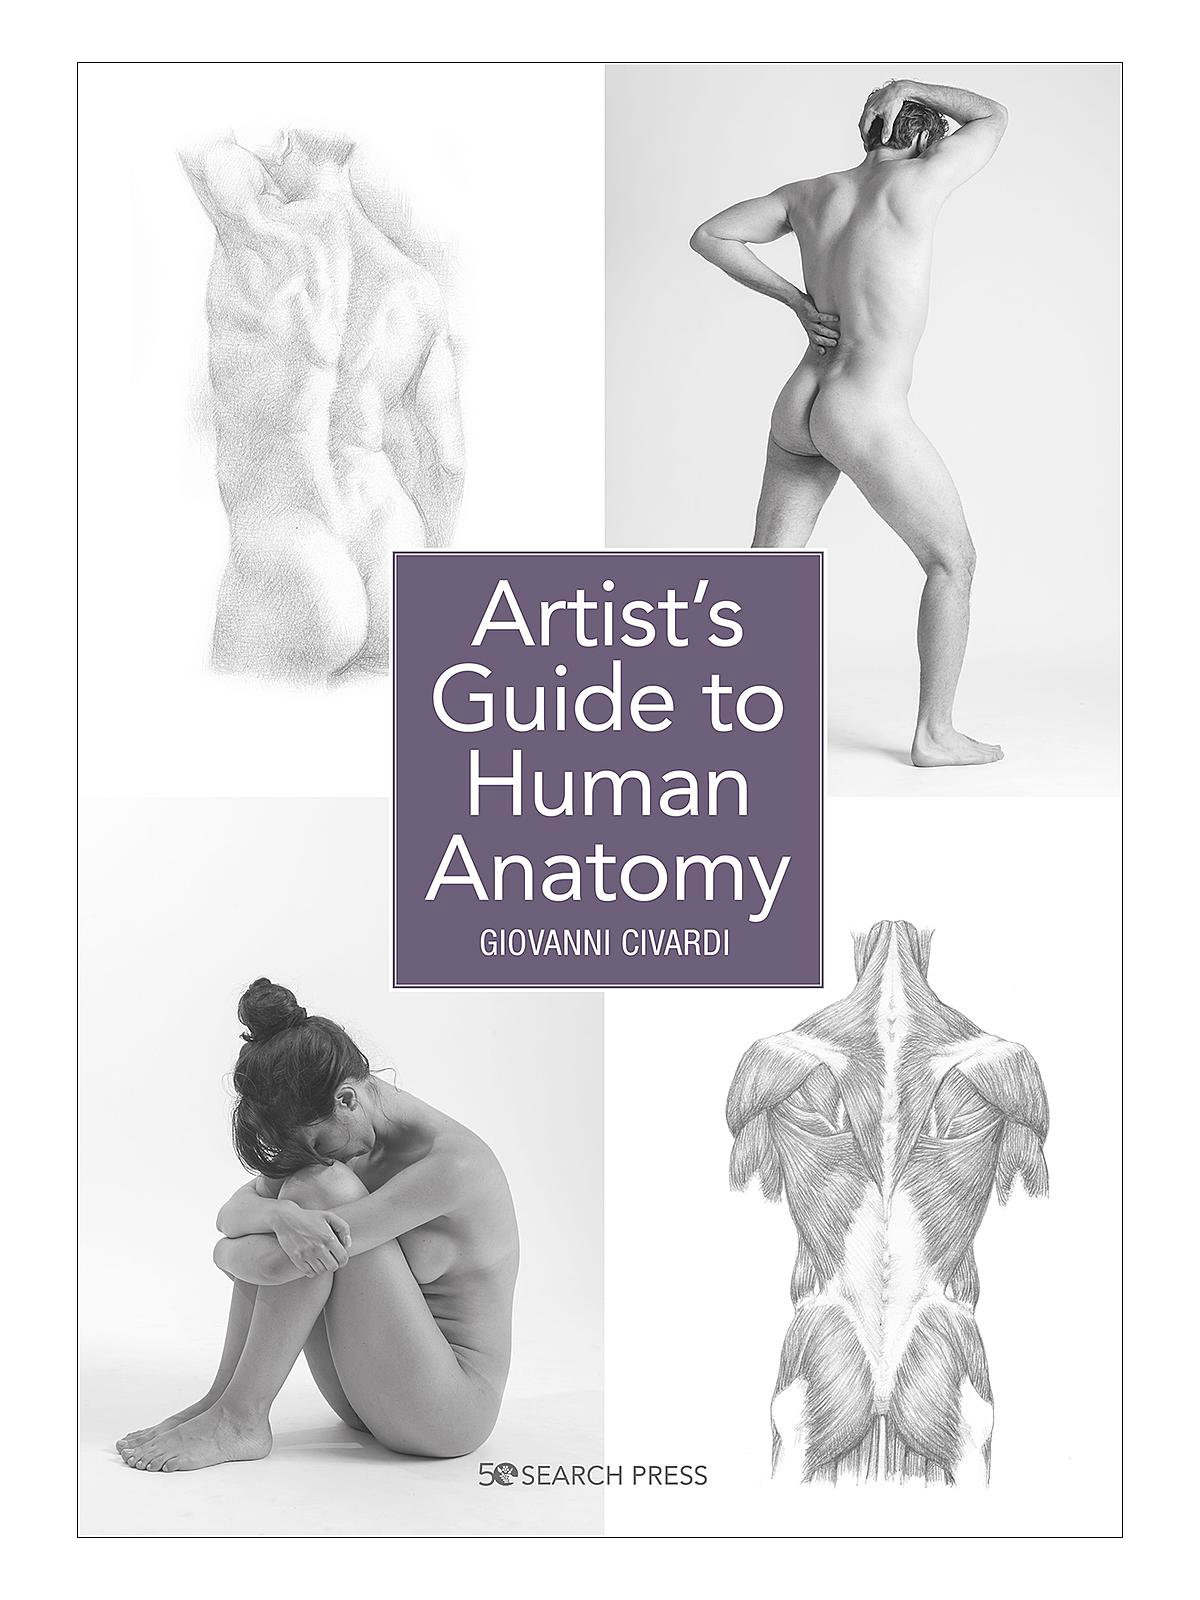 Full Anatomy Book by Precia-T on DeviantArt